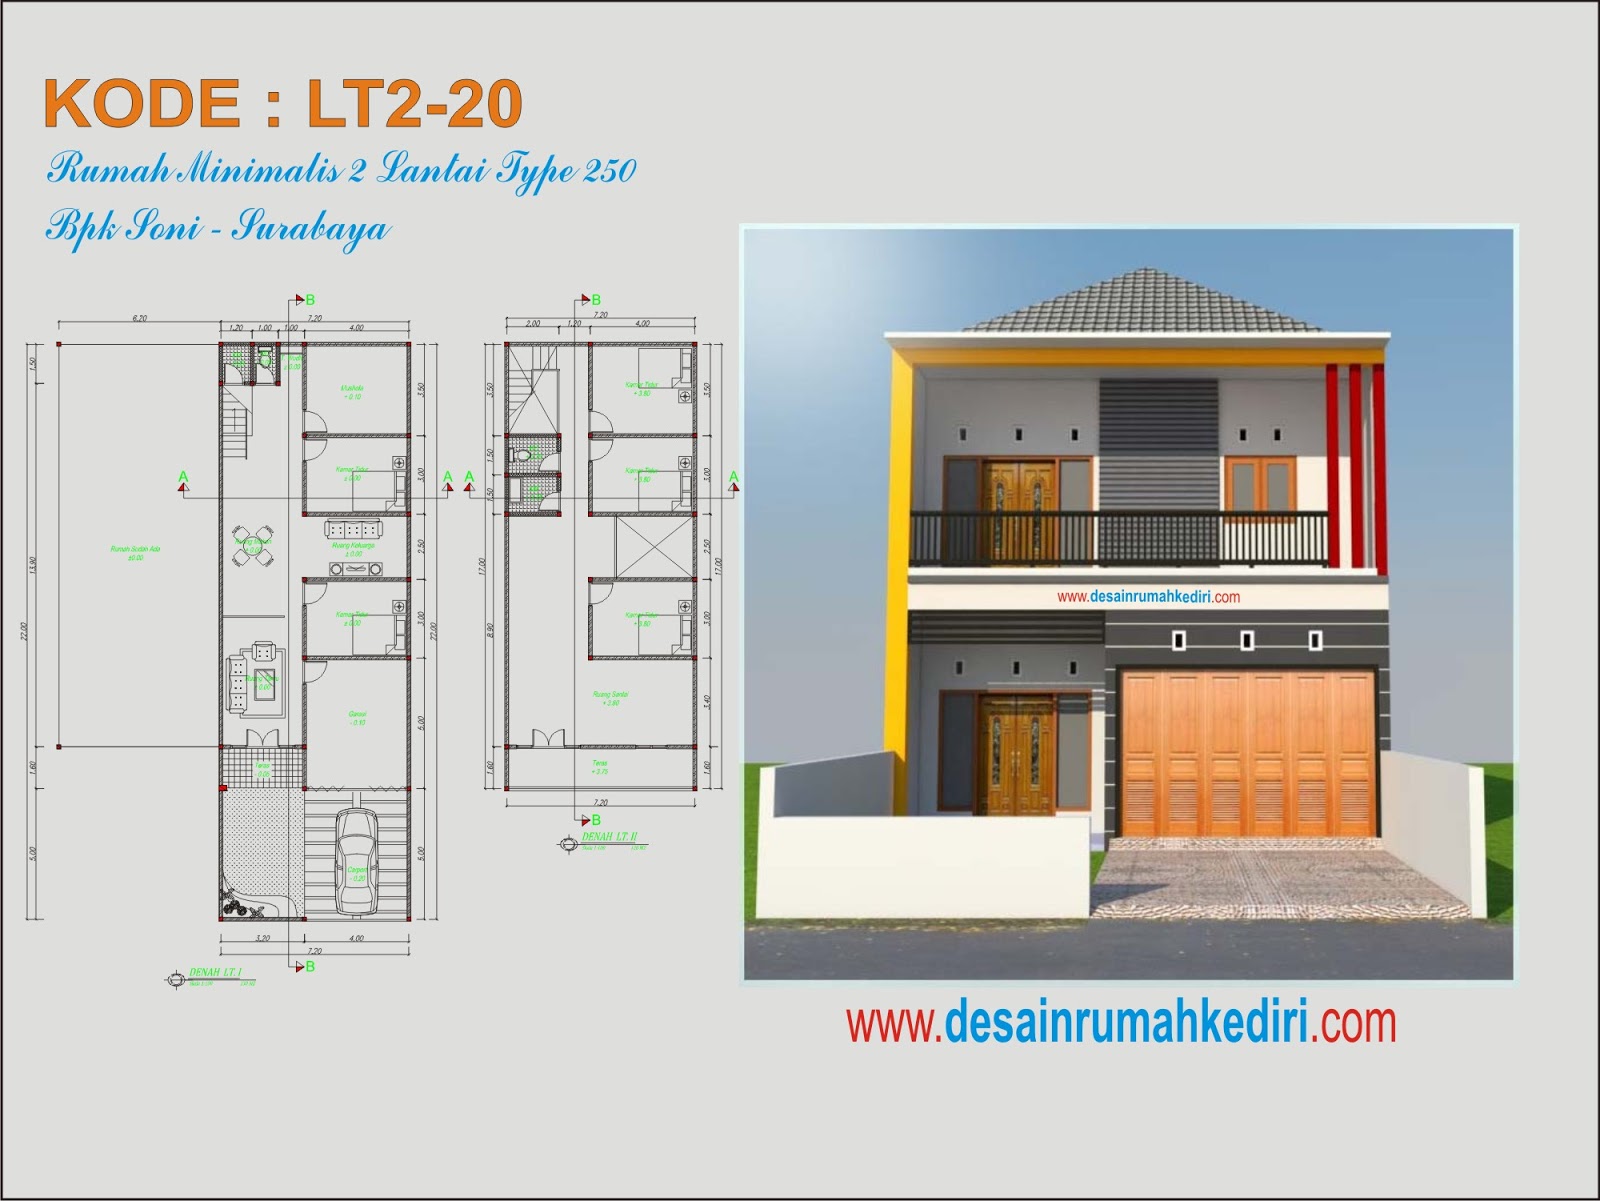 Lt2 20 Desain Rumah Minimalis 2 Lantai Bpk Sony Surabaya Jasa